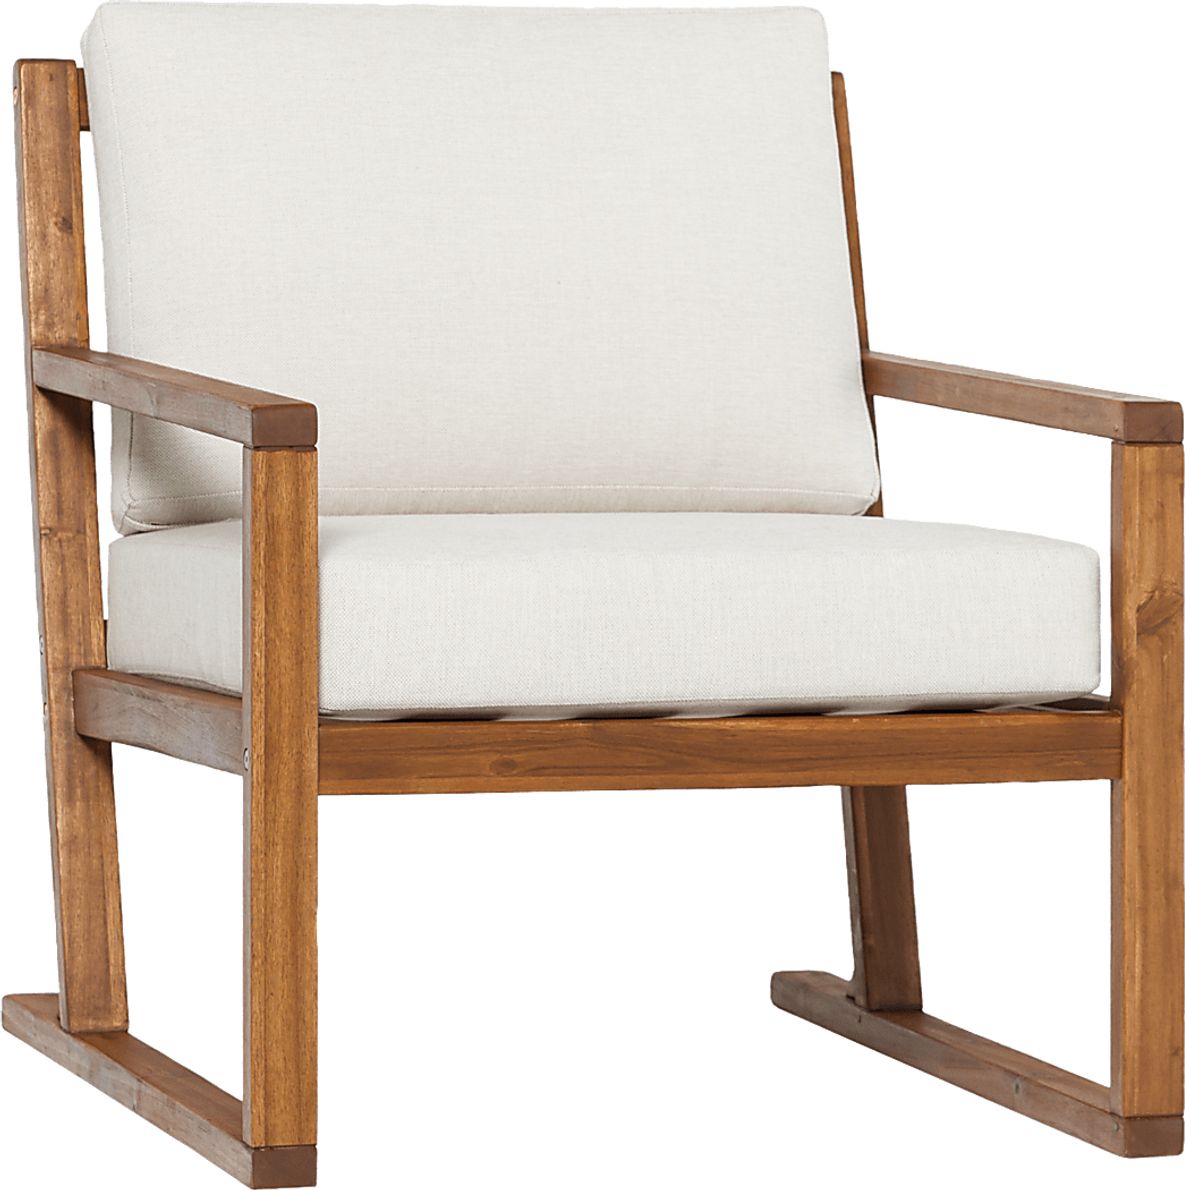 Outdoor Arborhazy Brown Accent Chair